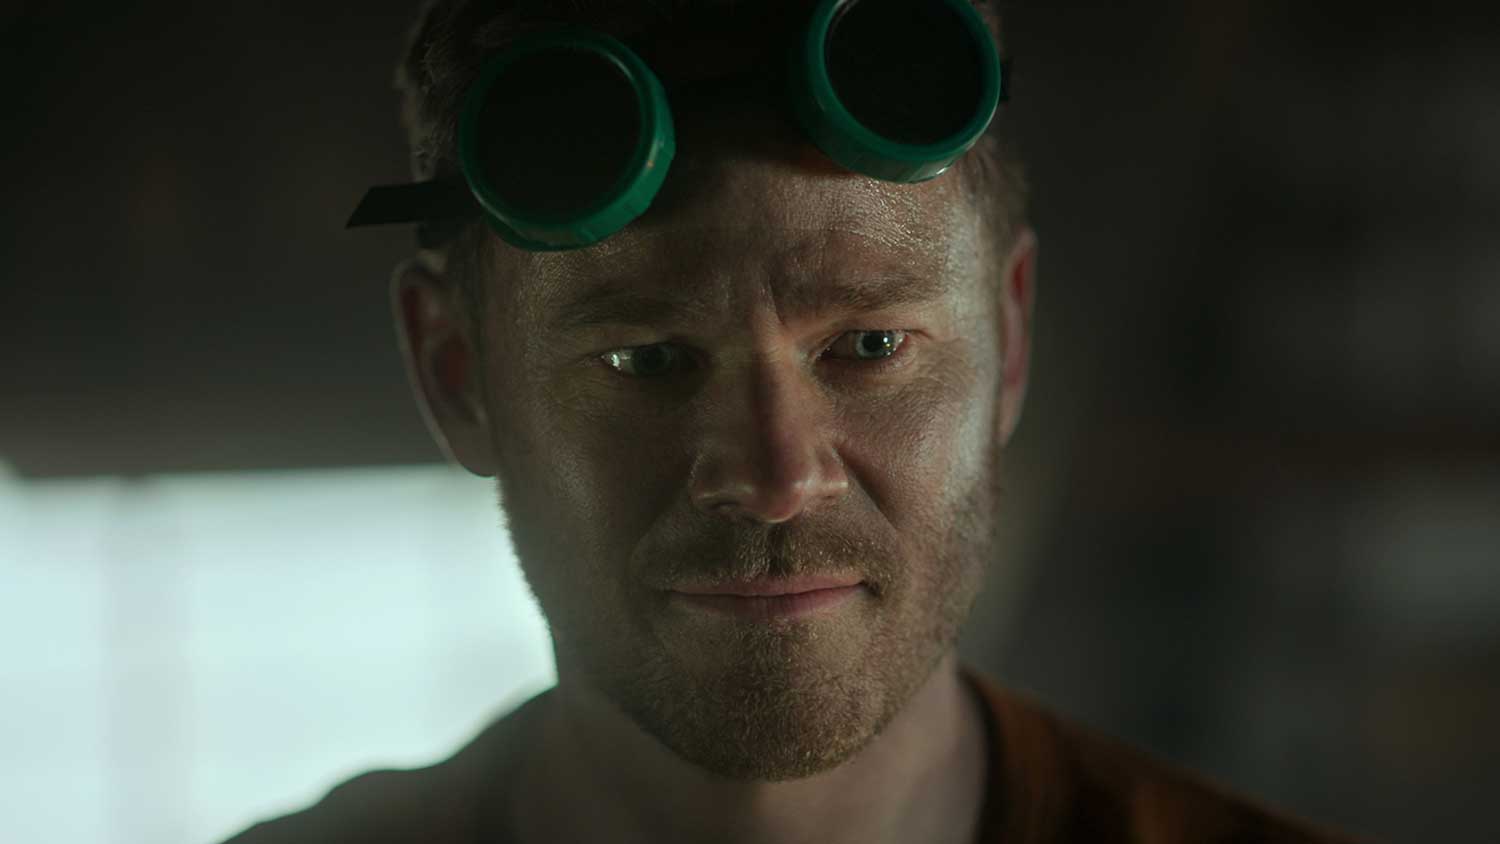 Netflix's Locke & Key Season 3 Spoiler Review